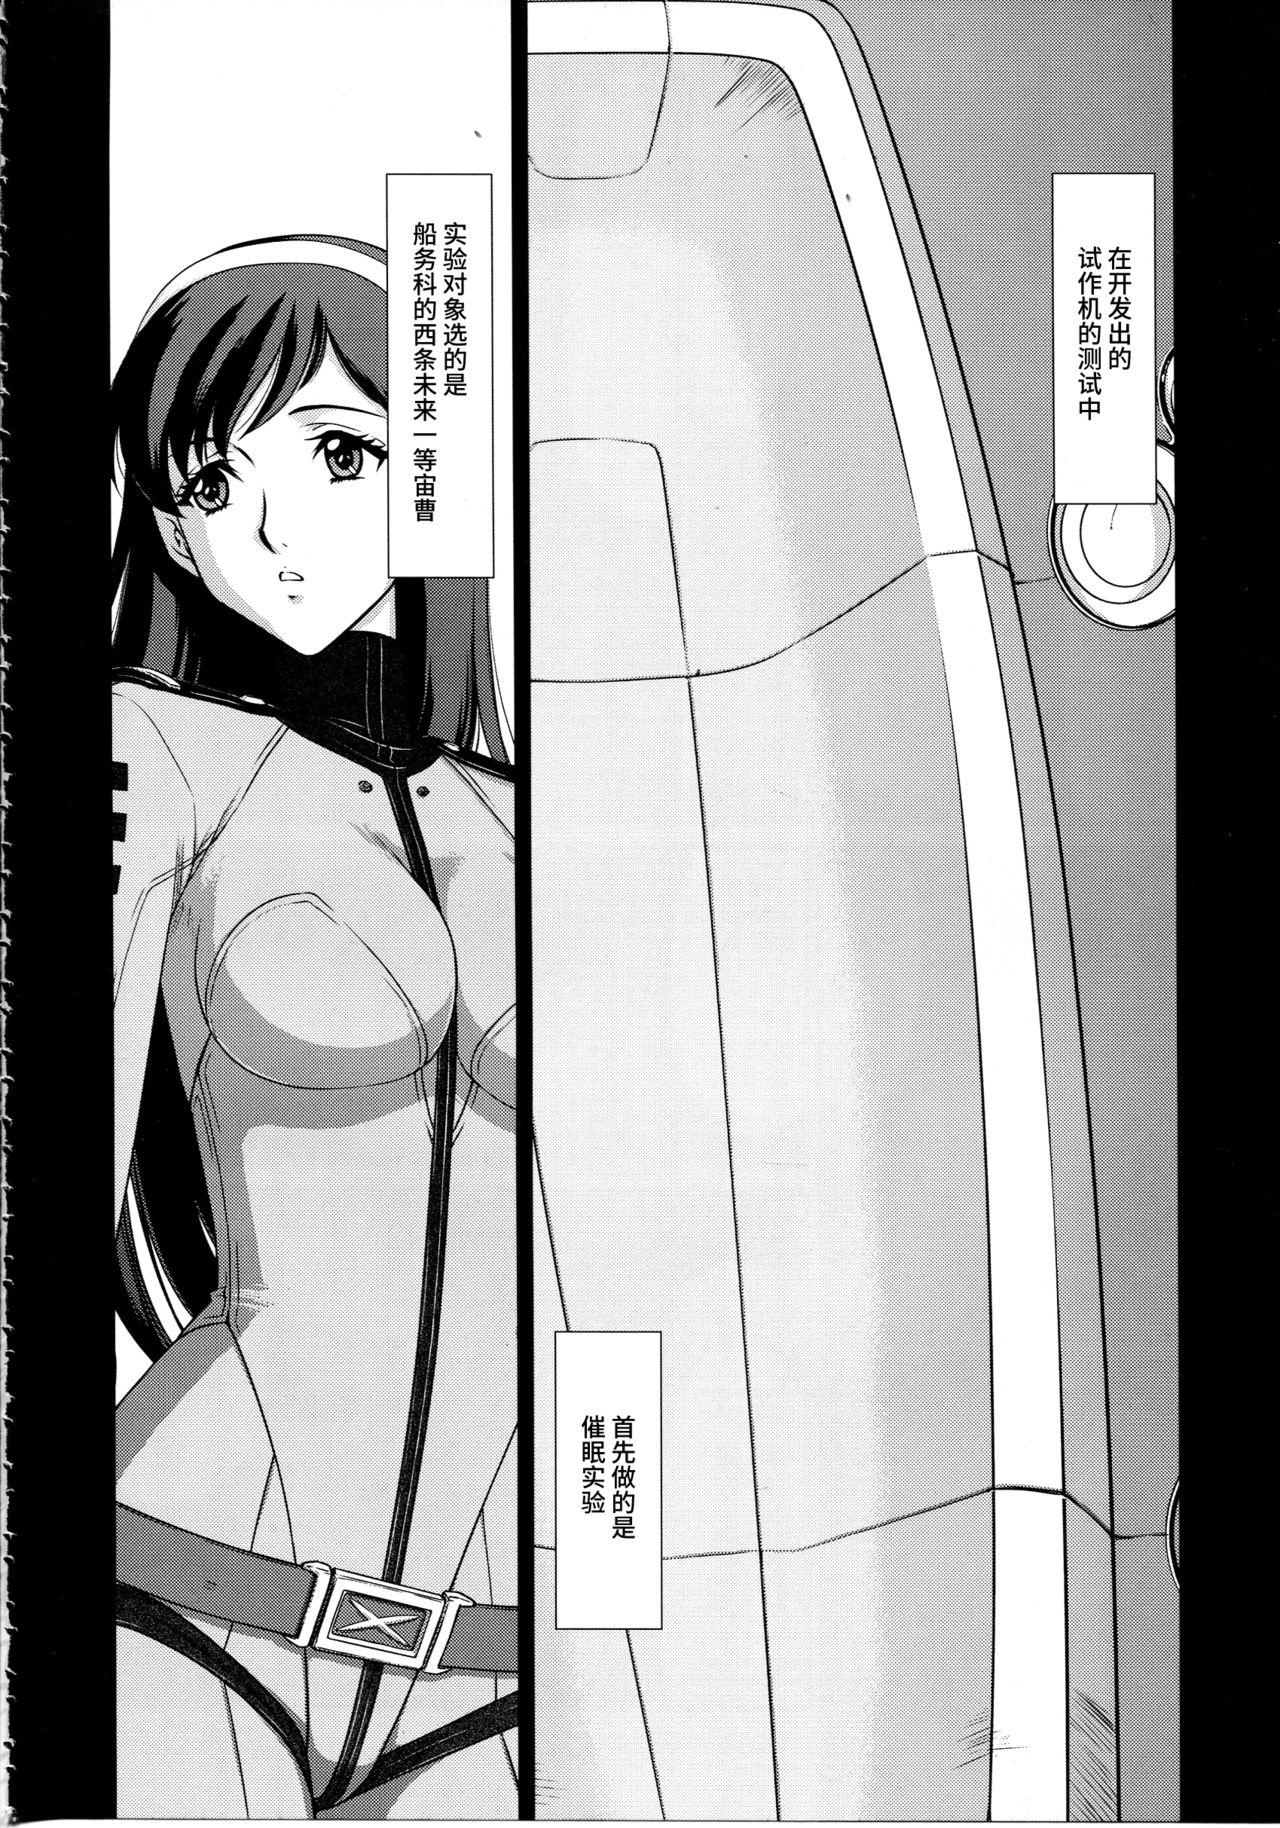 Best Yuki no Shizuku - Space battleship yamato 2199 Huge - Page 5